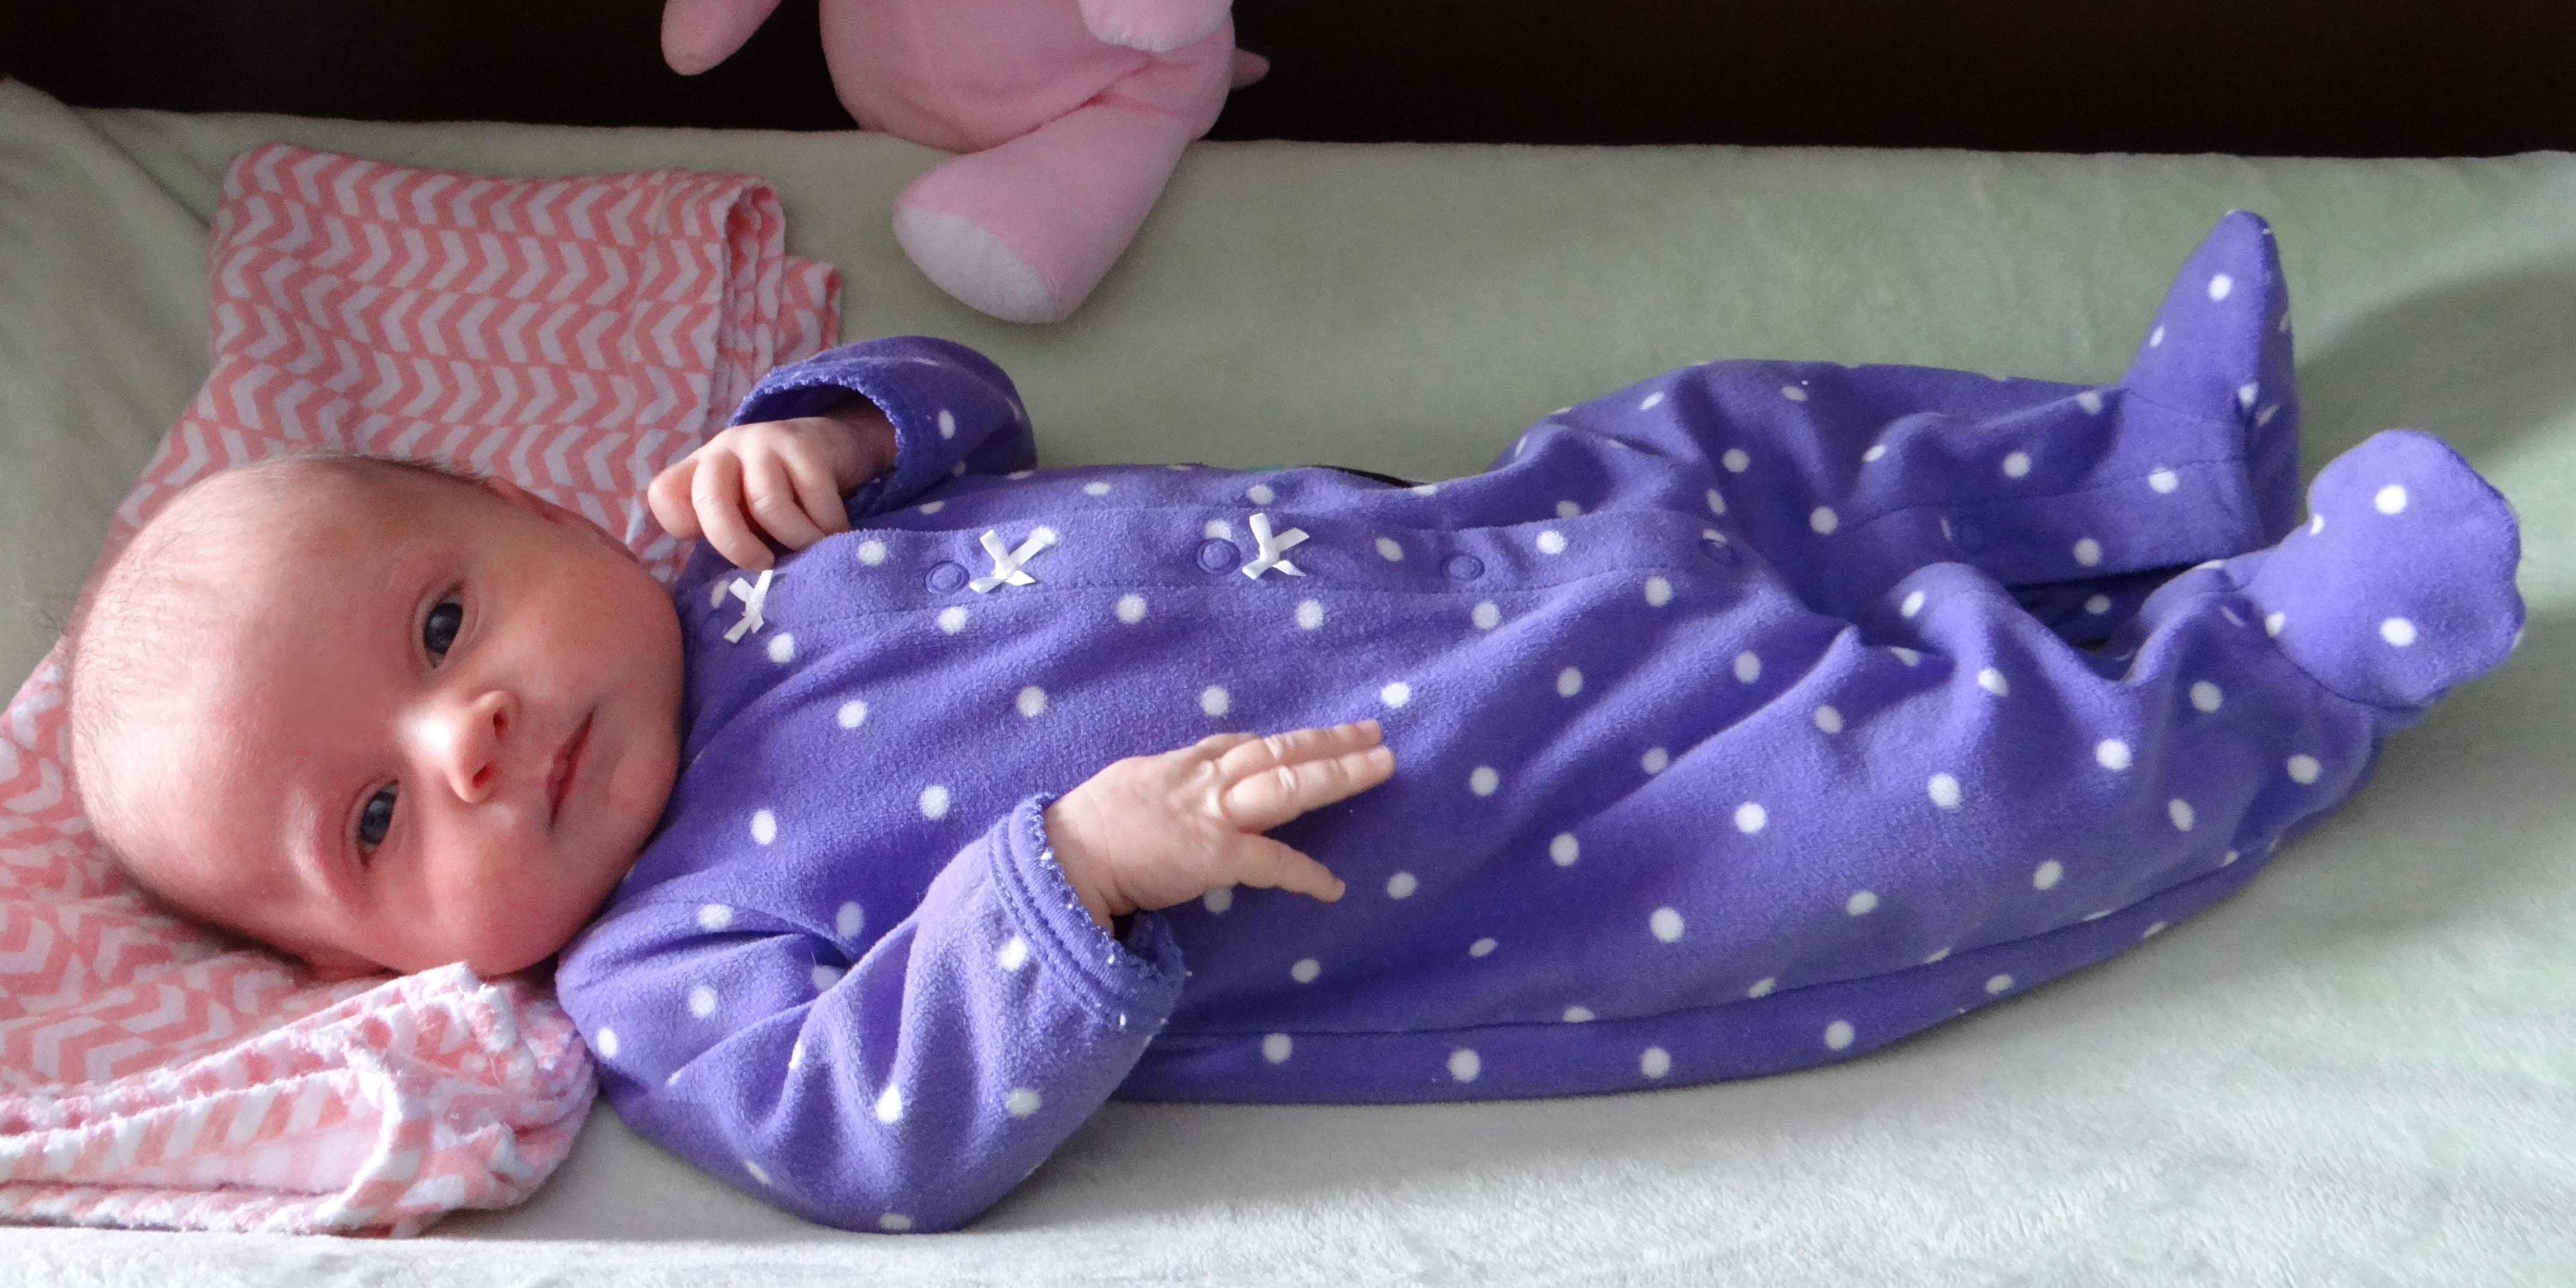 Baby wearing Carter's purple sleep and play pajamas